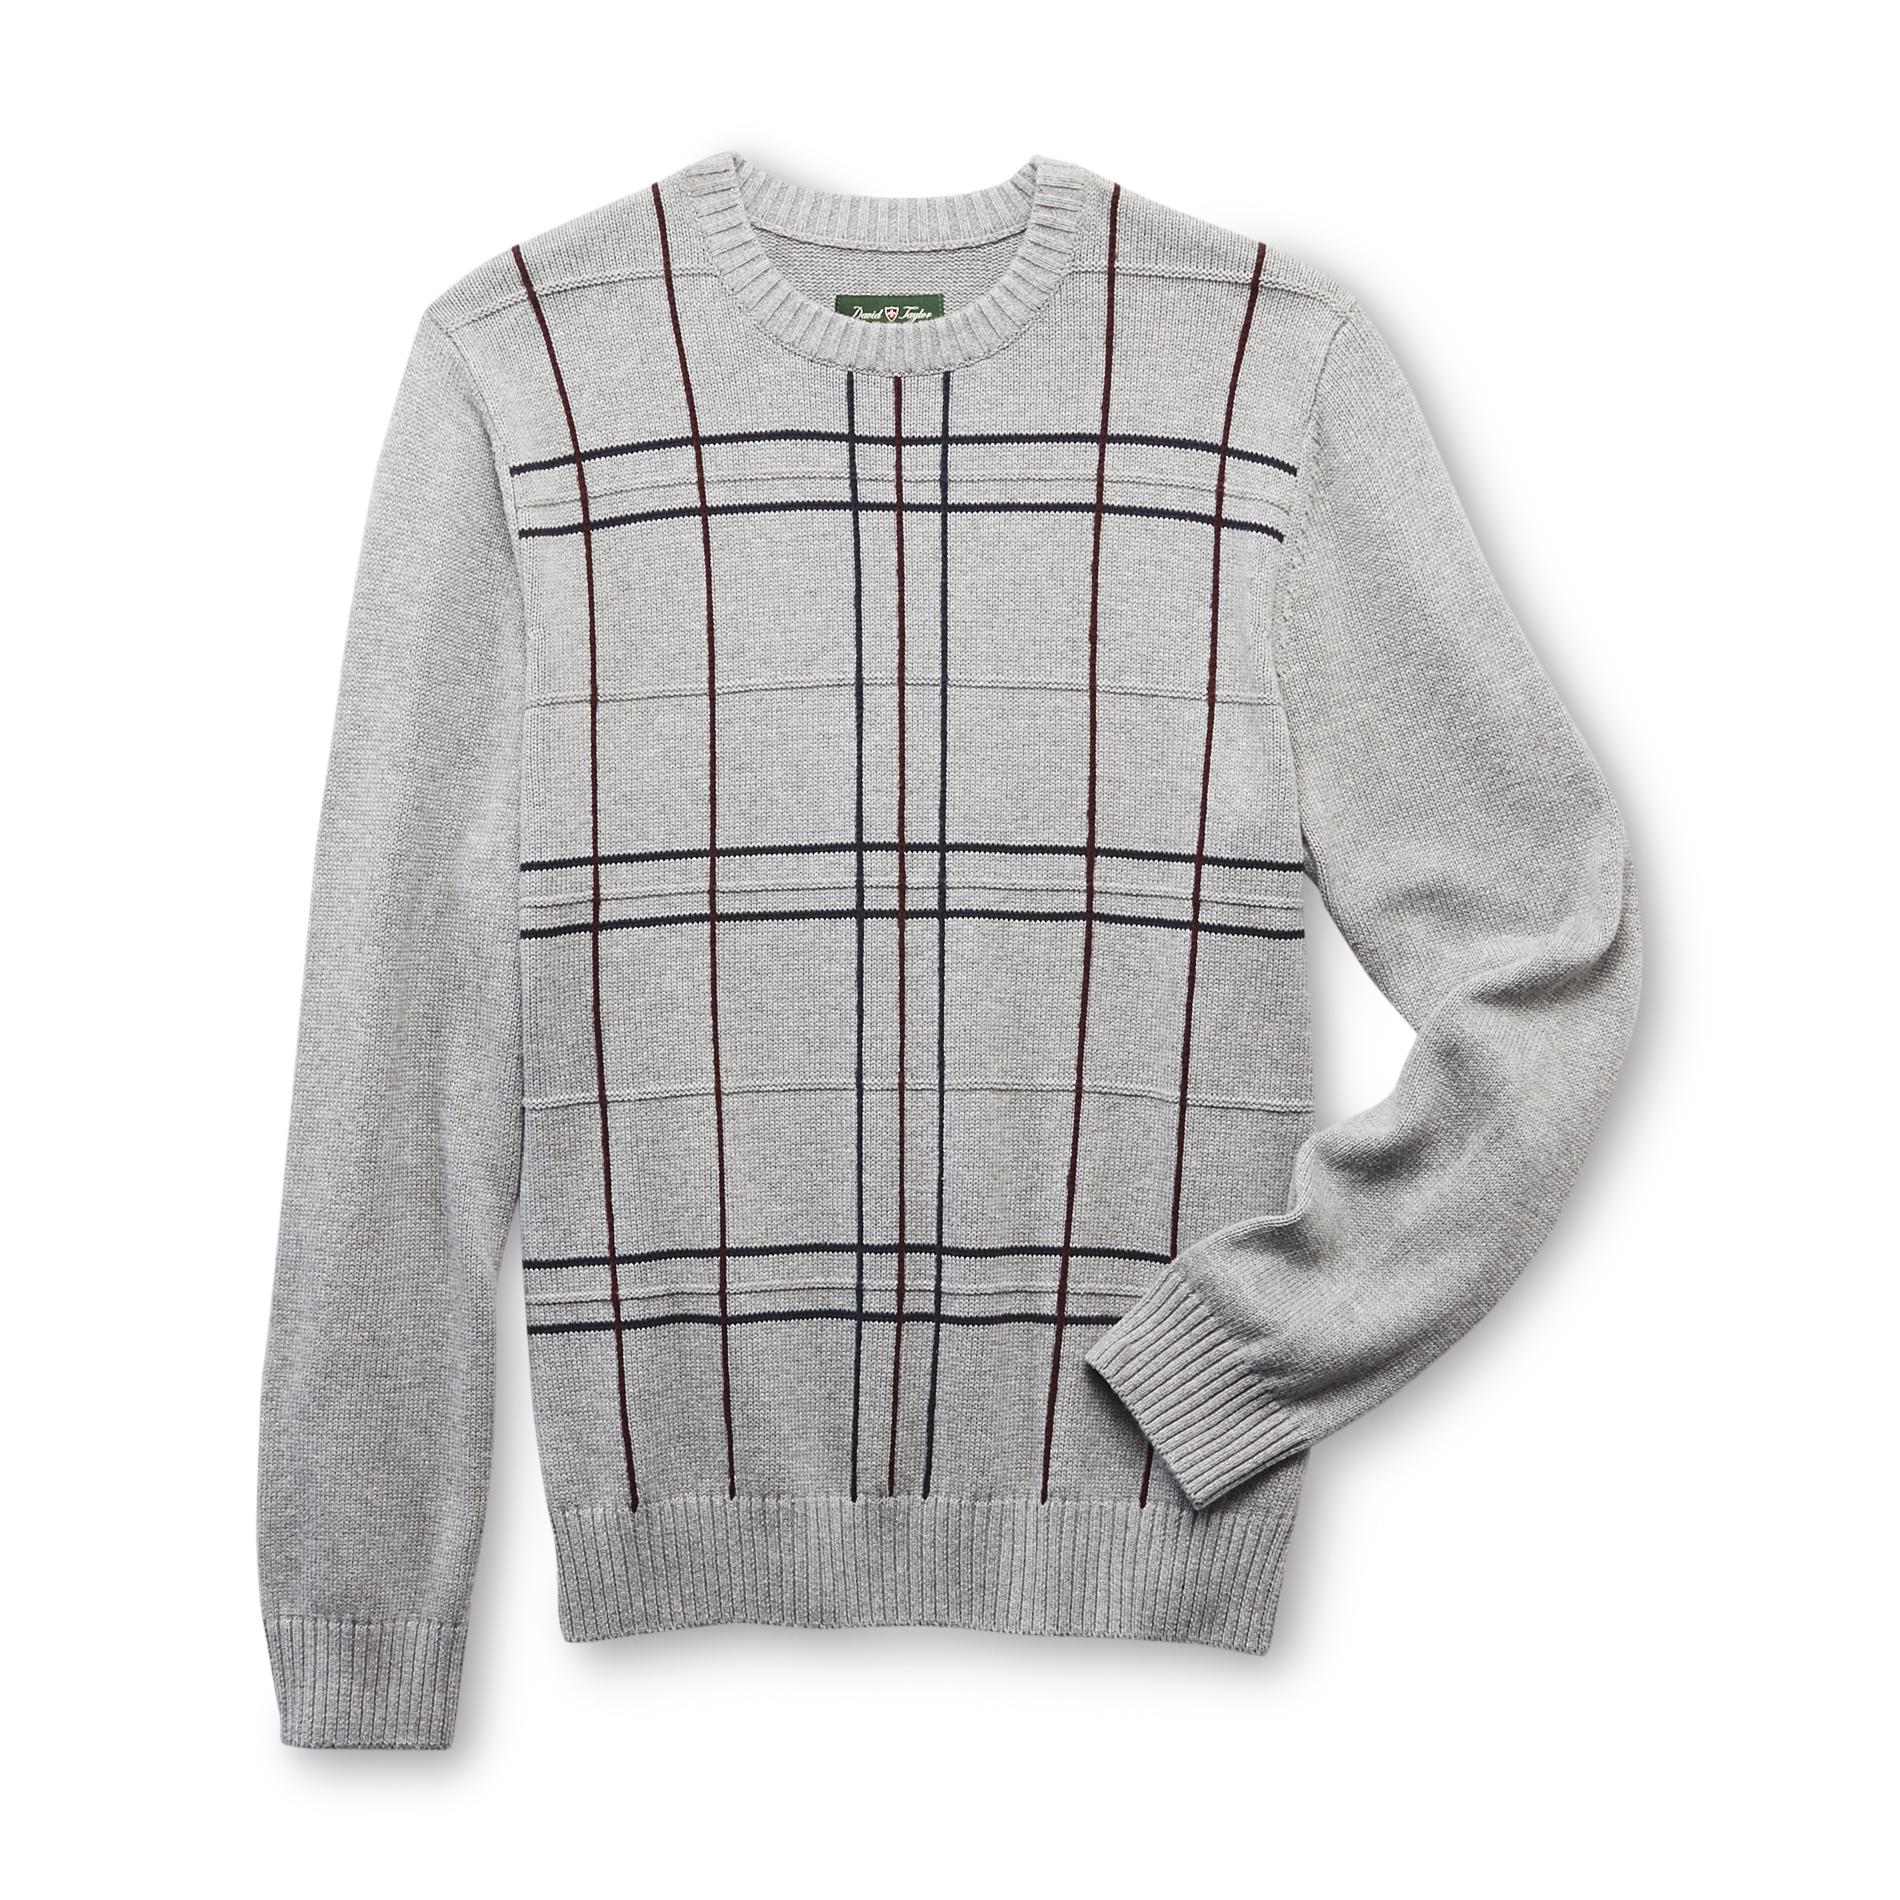 David Taylor Collection Men's Sweater - Windowpane